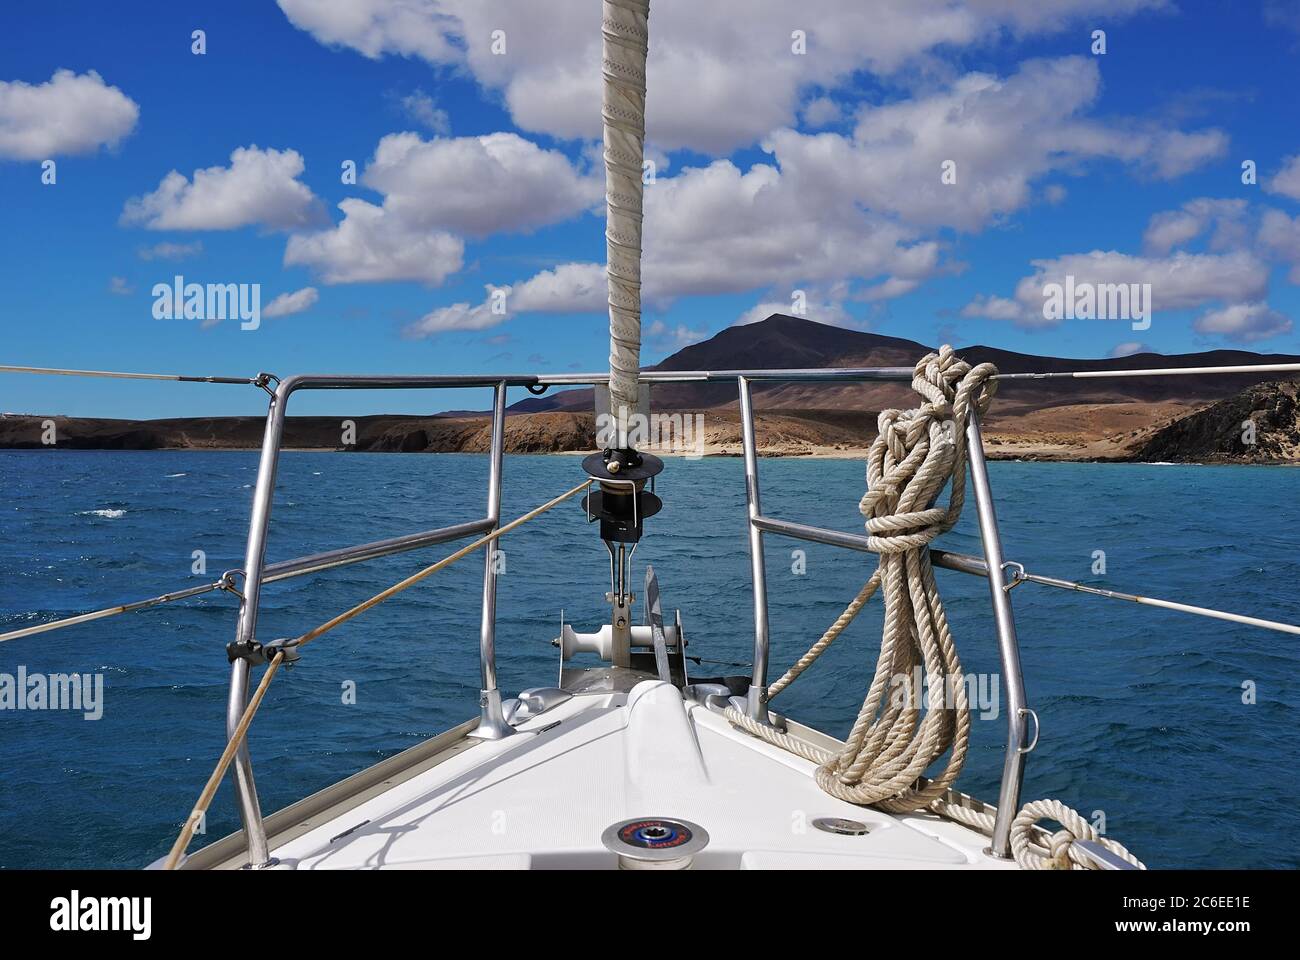 A sailing boat in the atlantic ocean. Lanzarote, Spain.  Canary Islands Archipelago Stock Photo